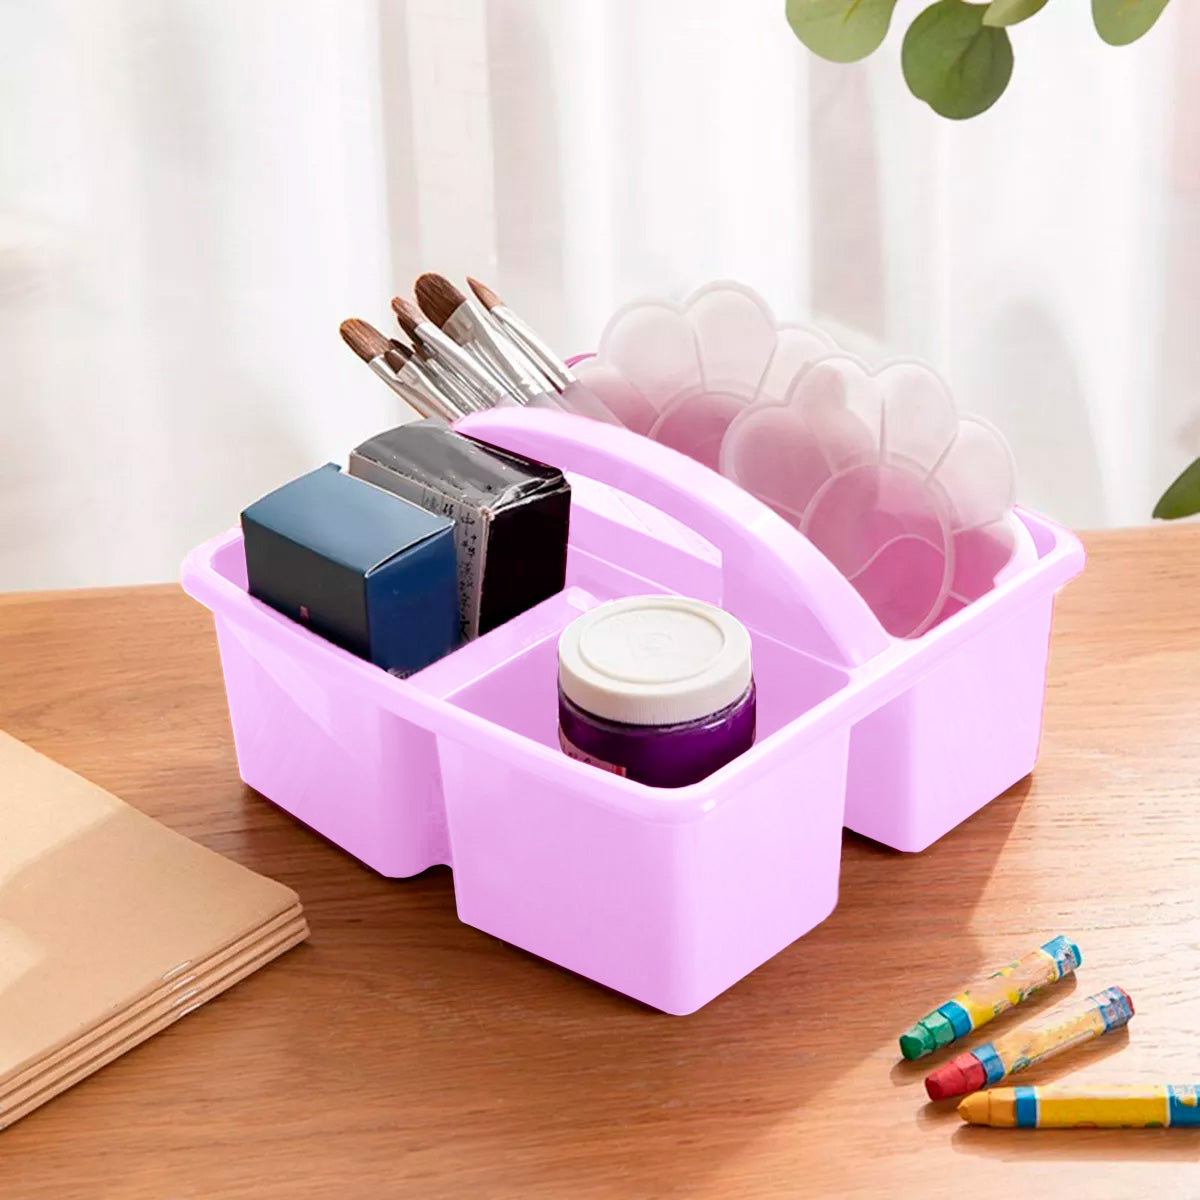 Organizador Plastico Para Hogar 4 Niveles Varios Colores Home Life 723-4544